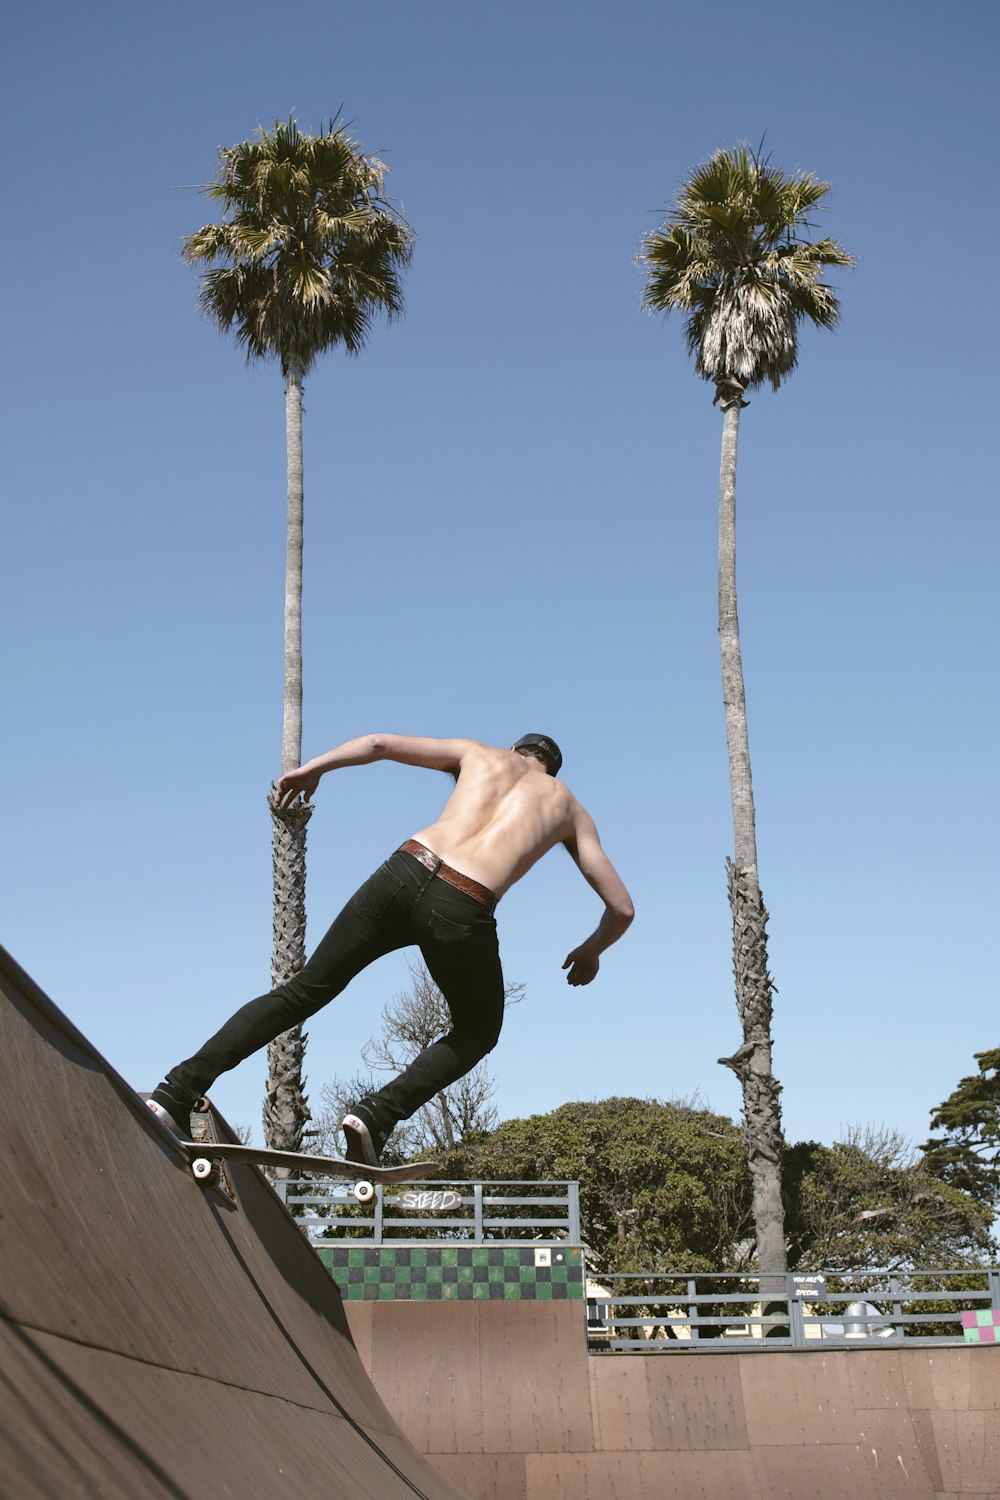 man skateboarding on ramp near trees